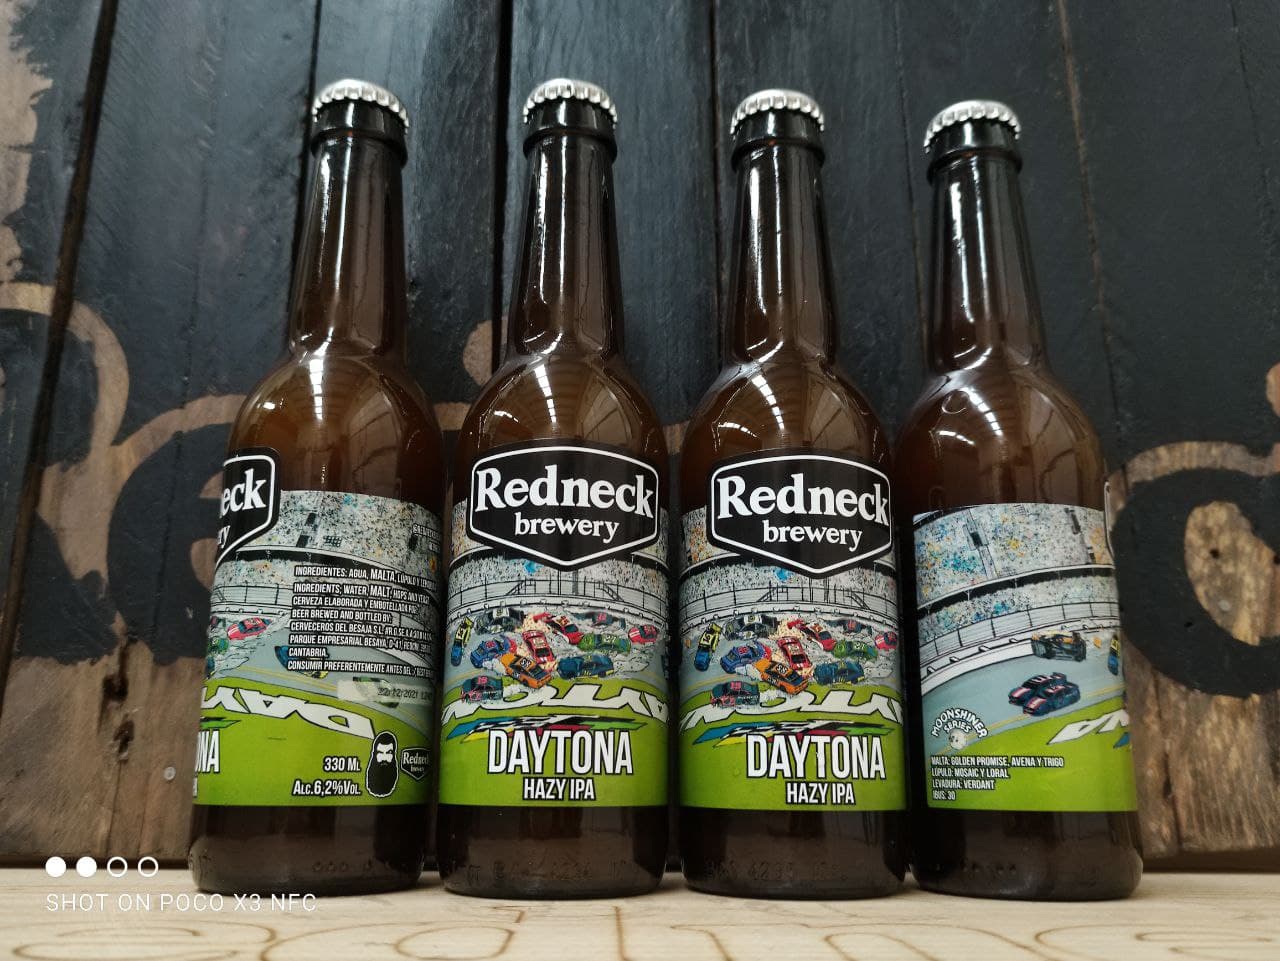 Daytona, de Redneck Brewery